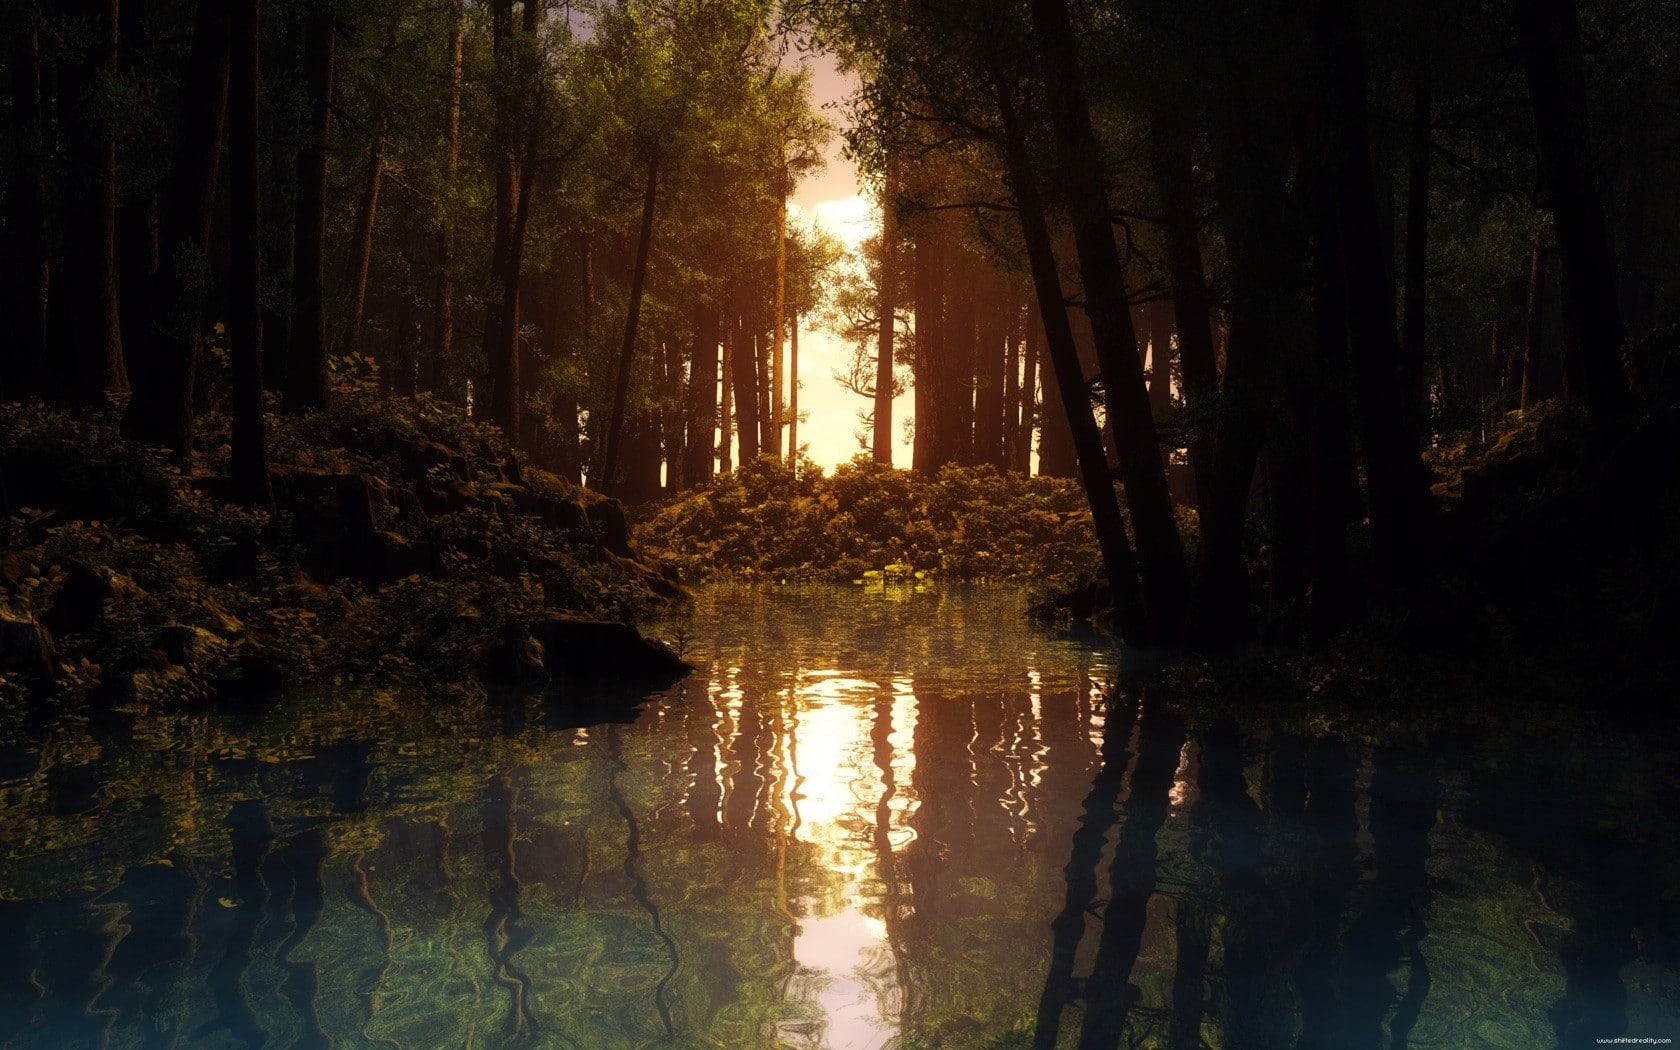 reflection, CGI, sunset, forest, creeks